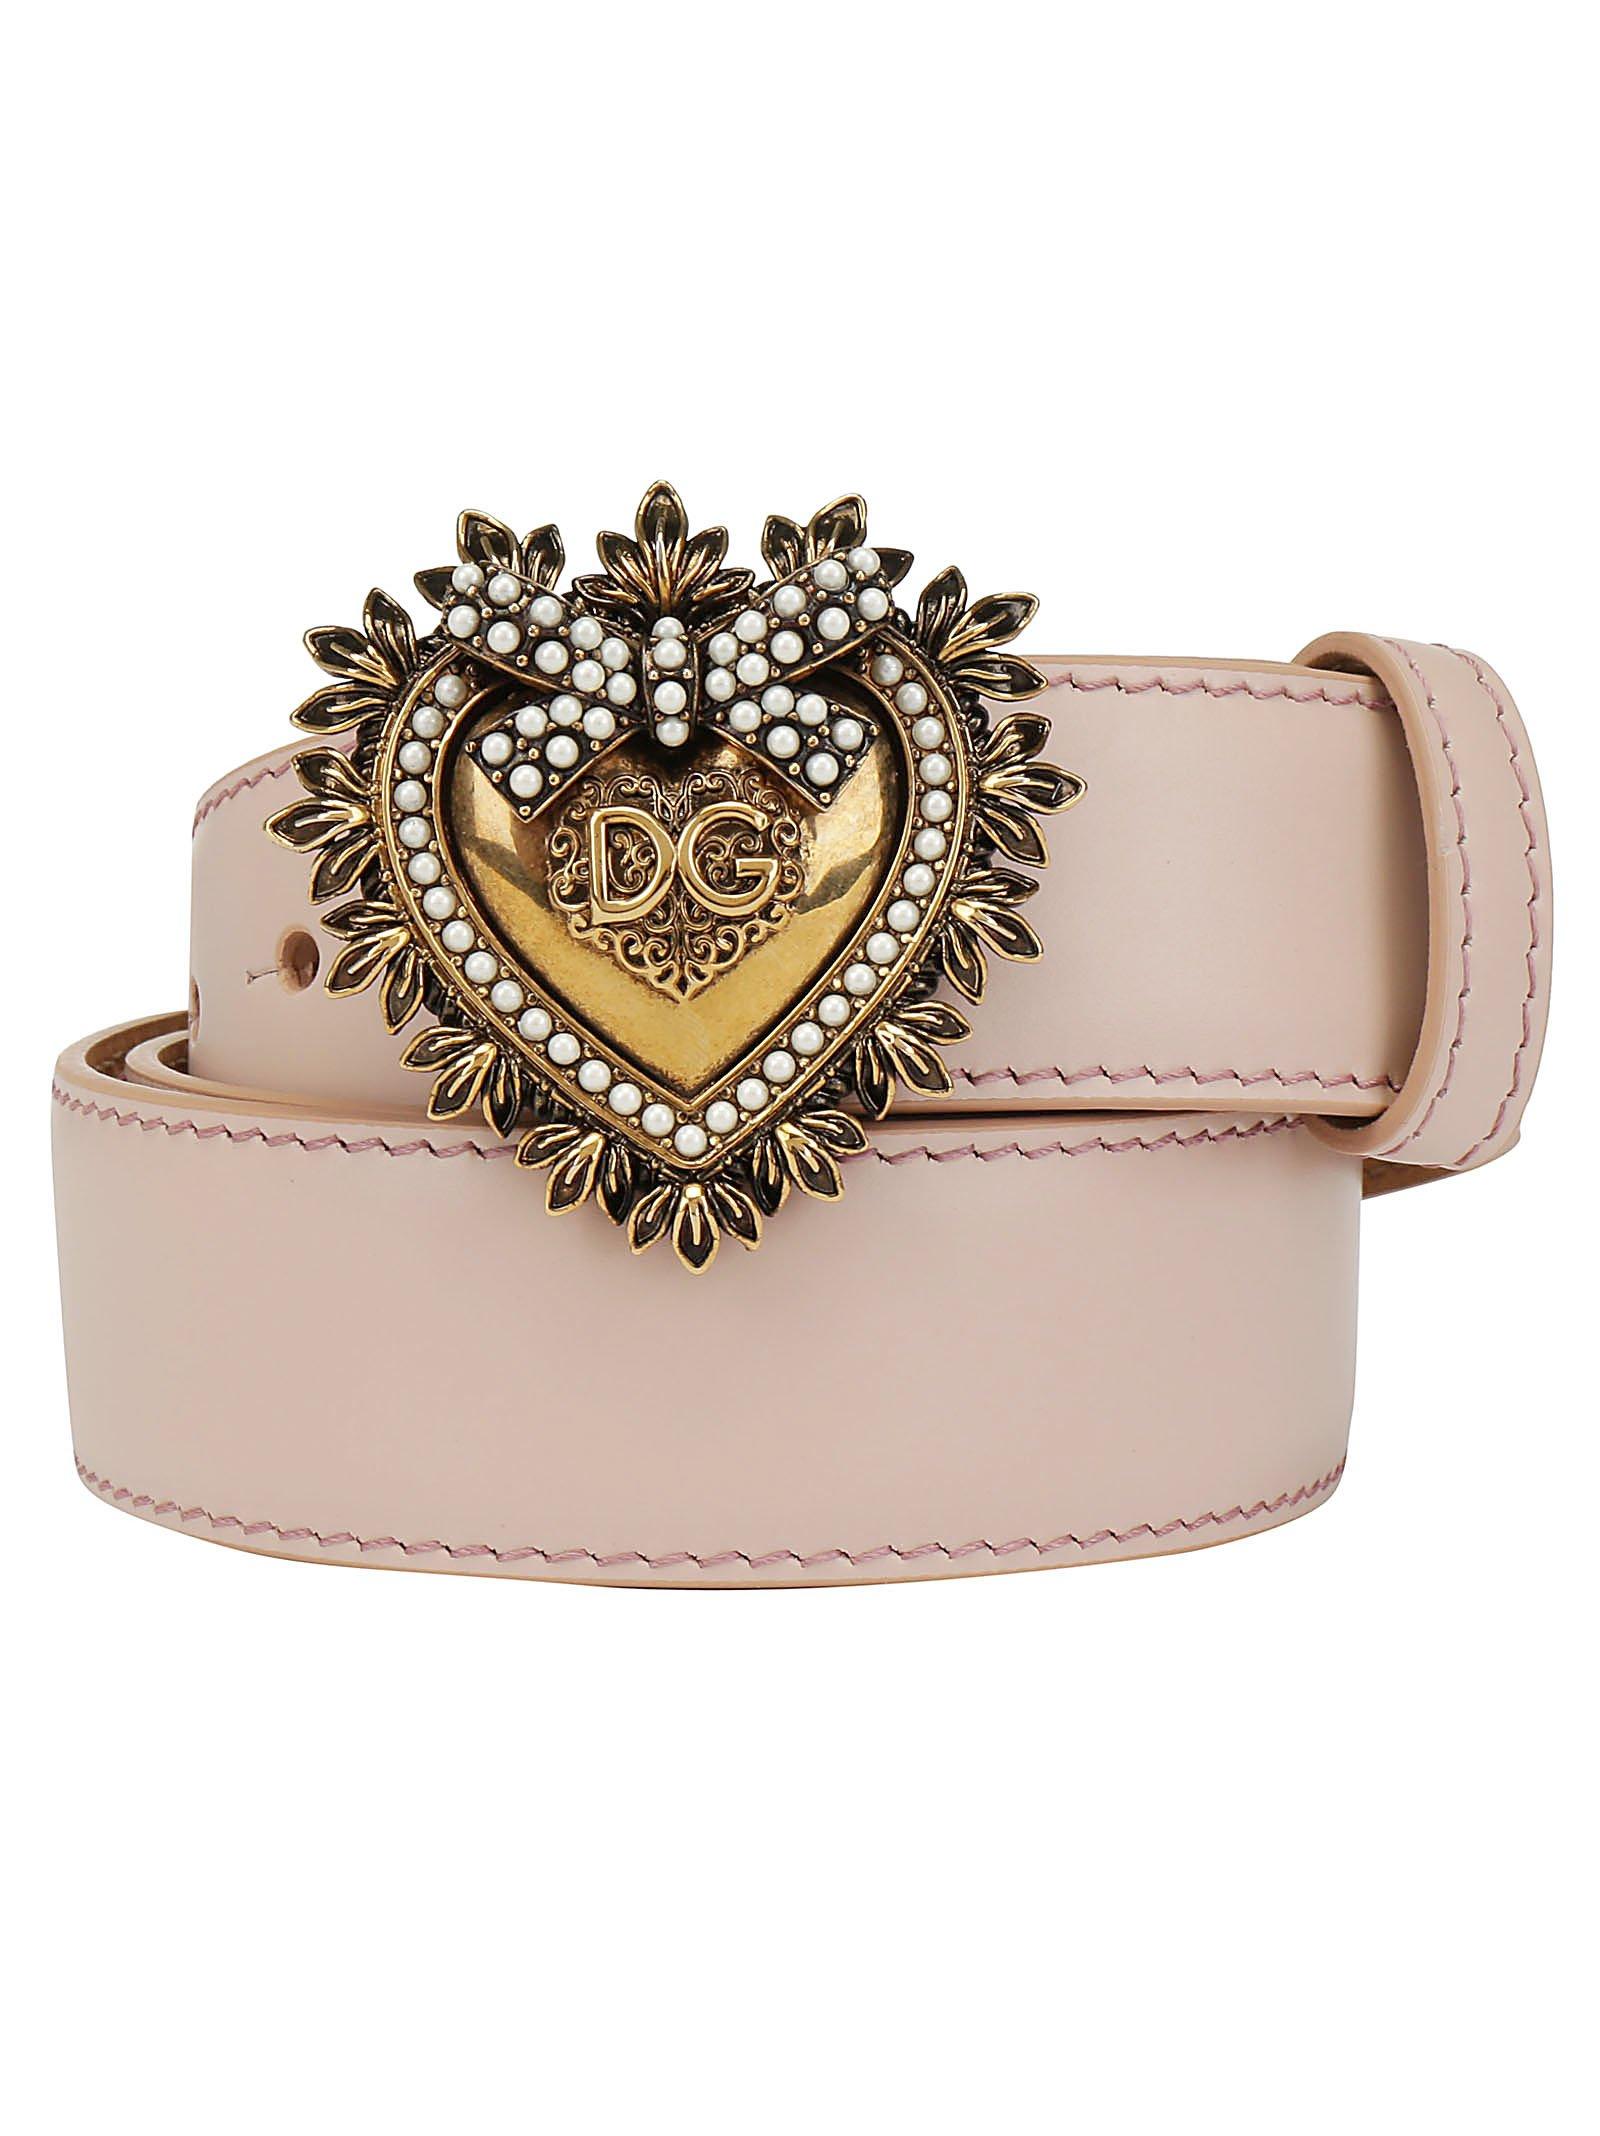 Dolce & Gabbana Leather Devotion Belt in Beige (Natural) - Lyst